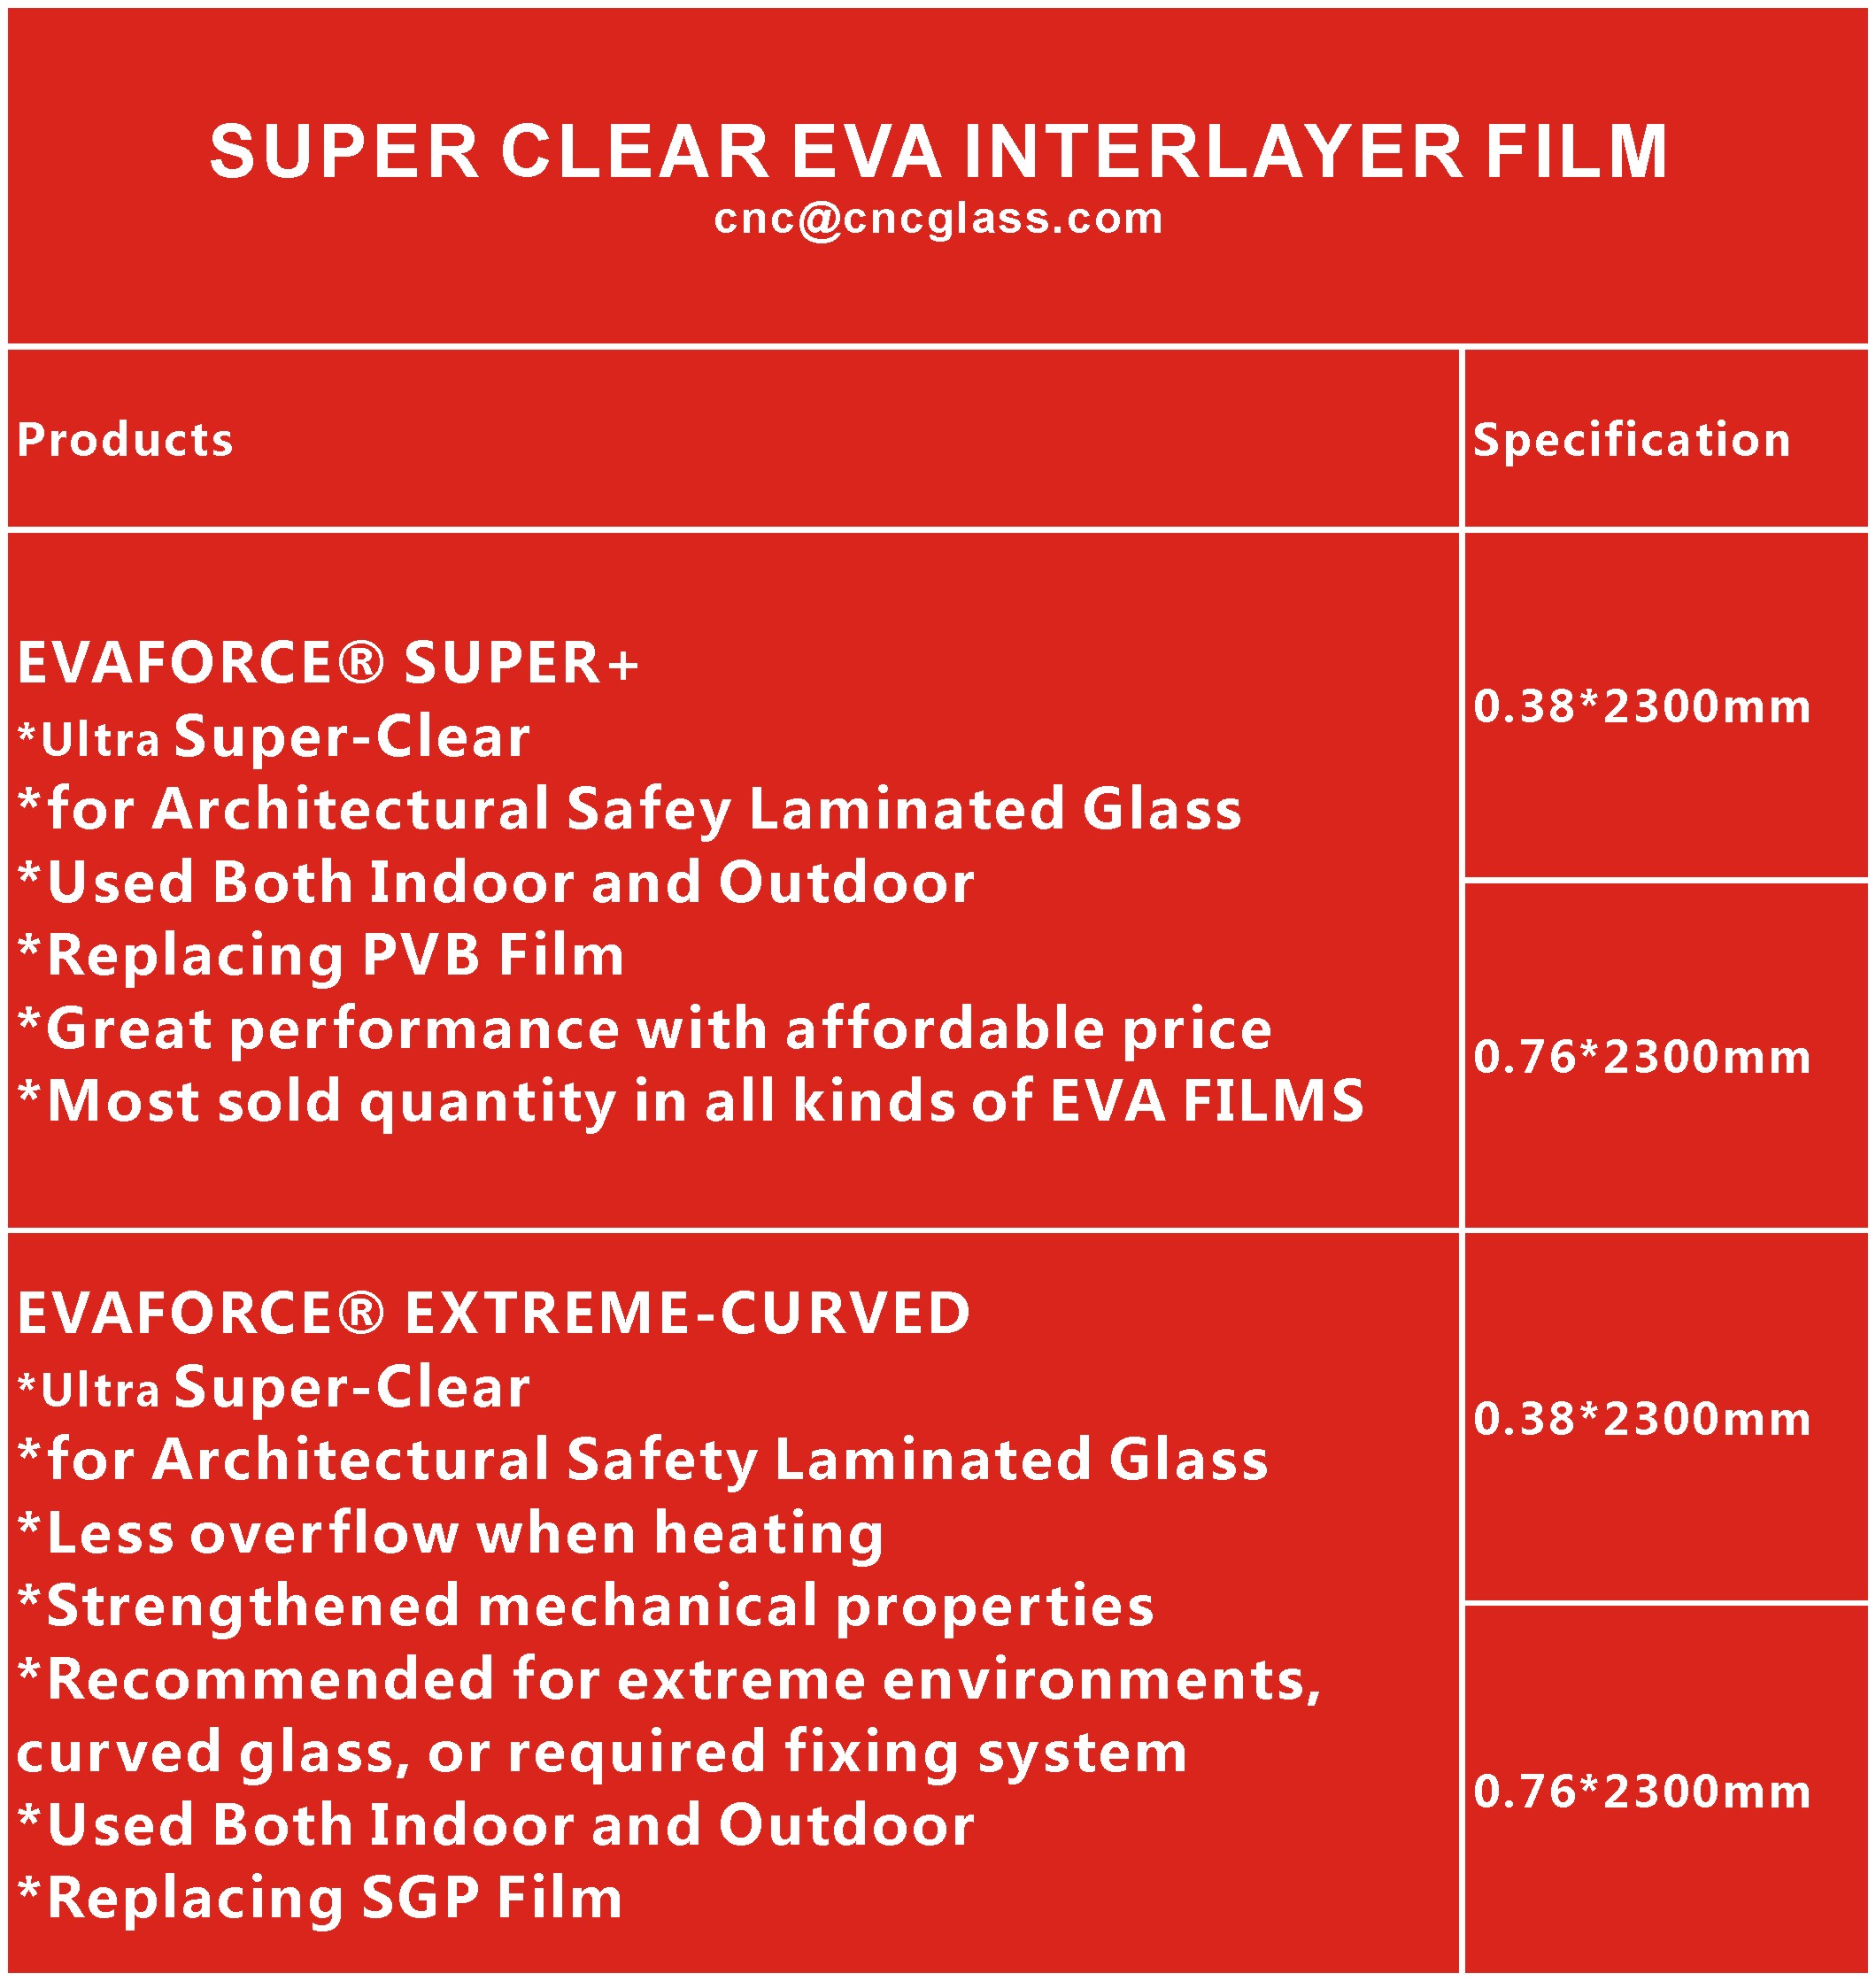 ULTRA SUPER CLEAR EVAFOFCE® INTERLAYER FILM